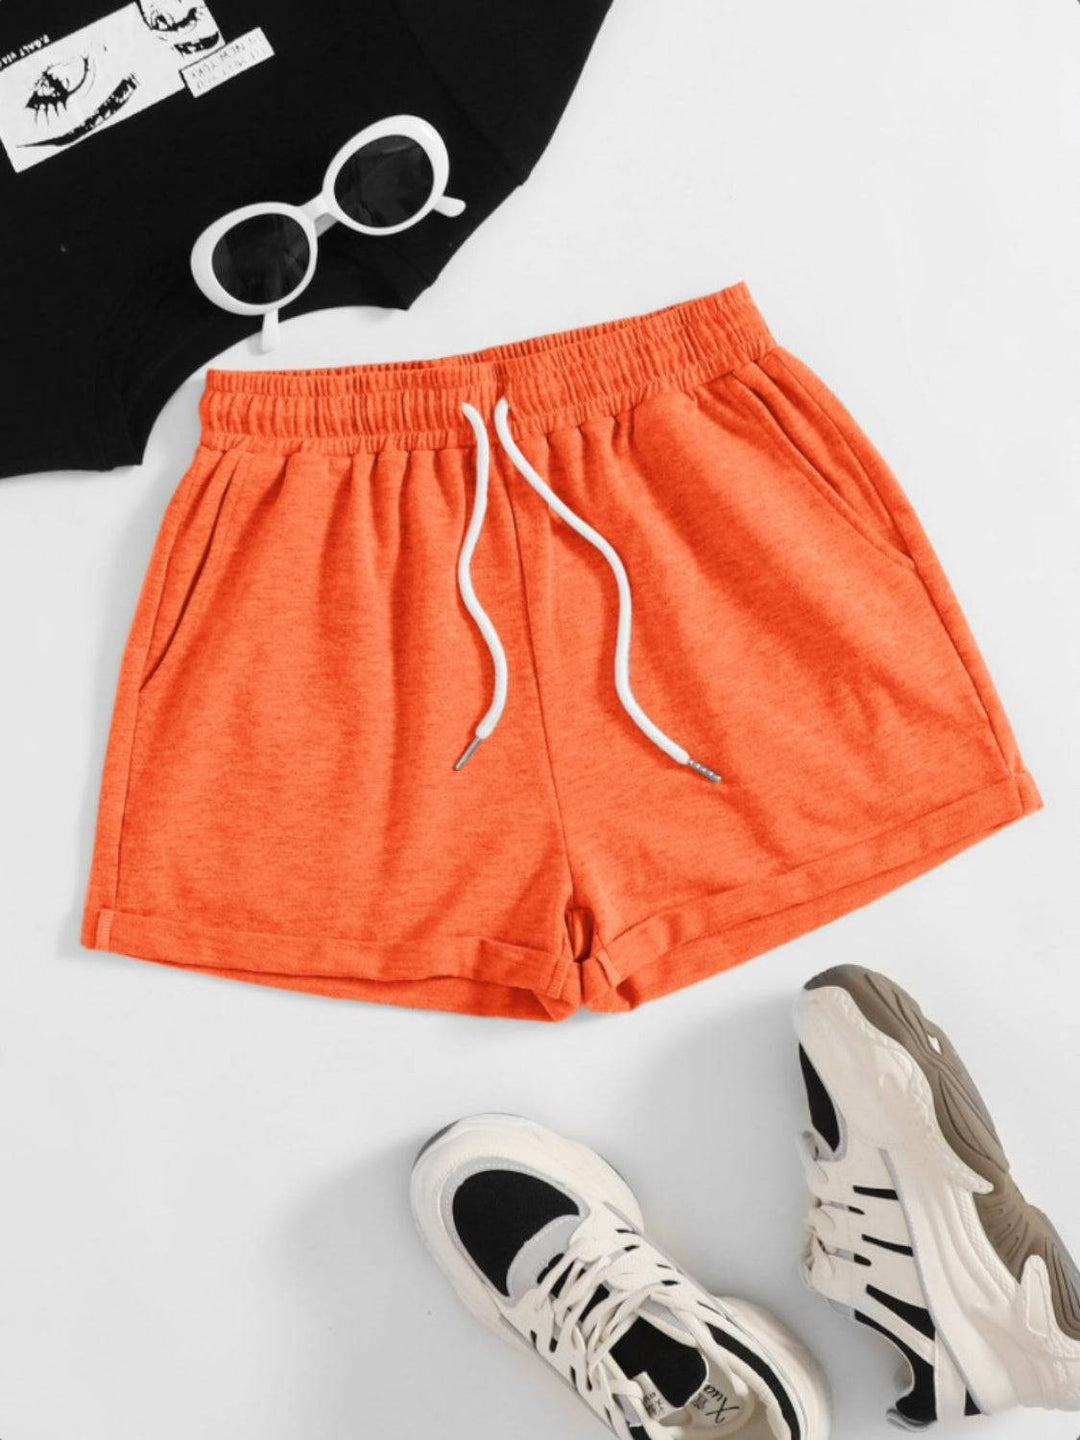 a pair of orange shorts and a black shirt